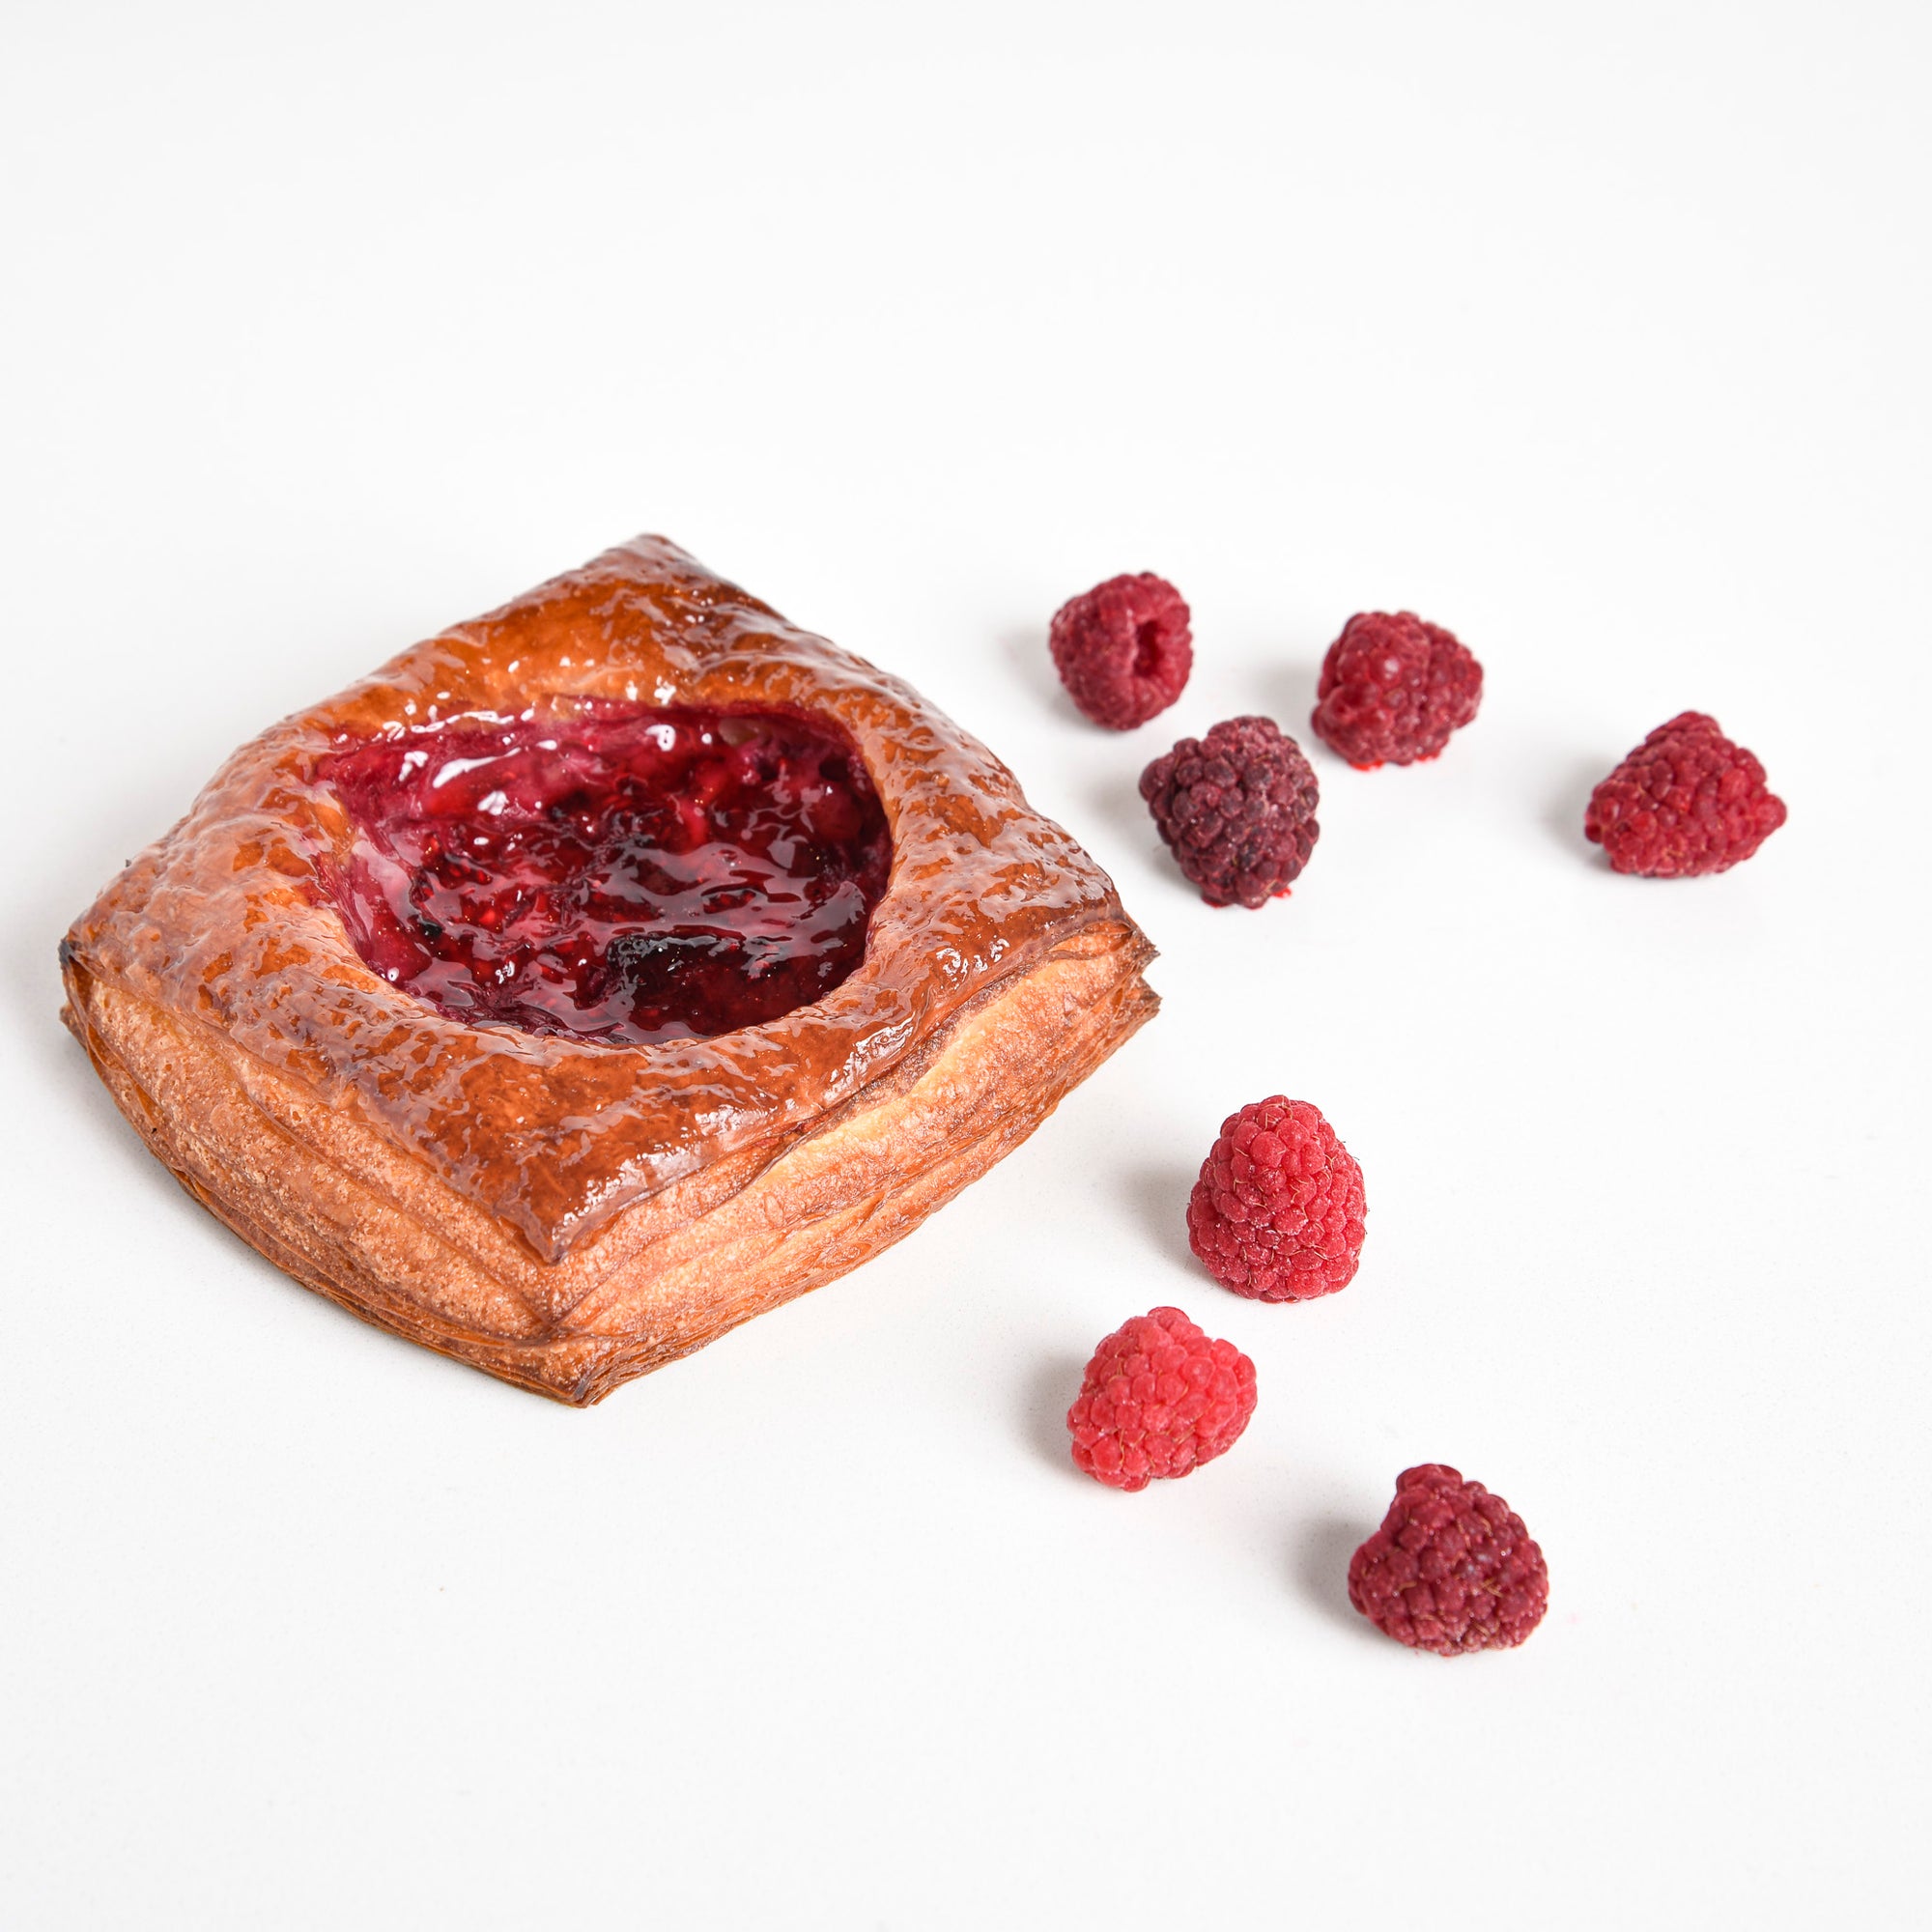 Le fournil bakery danoise aux framboises danish with fresh raspberries